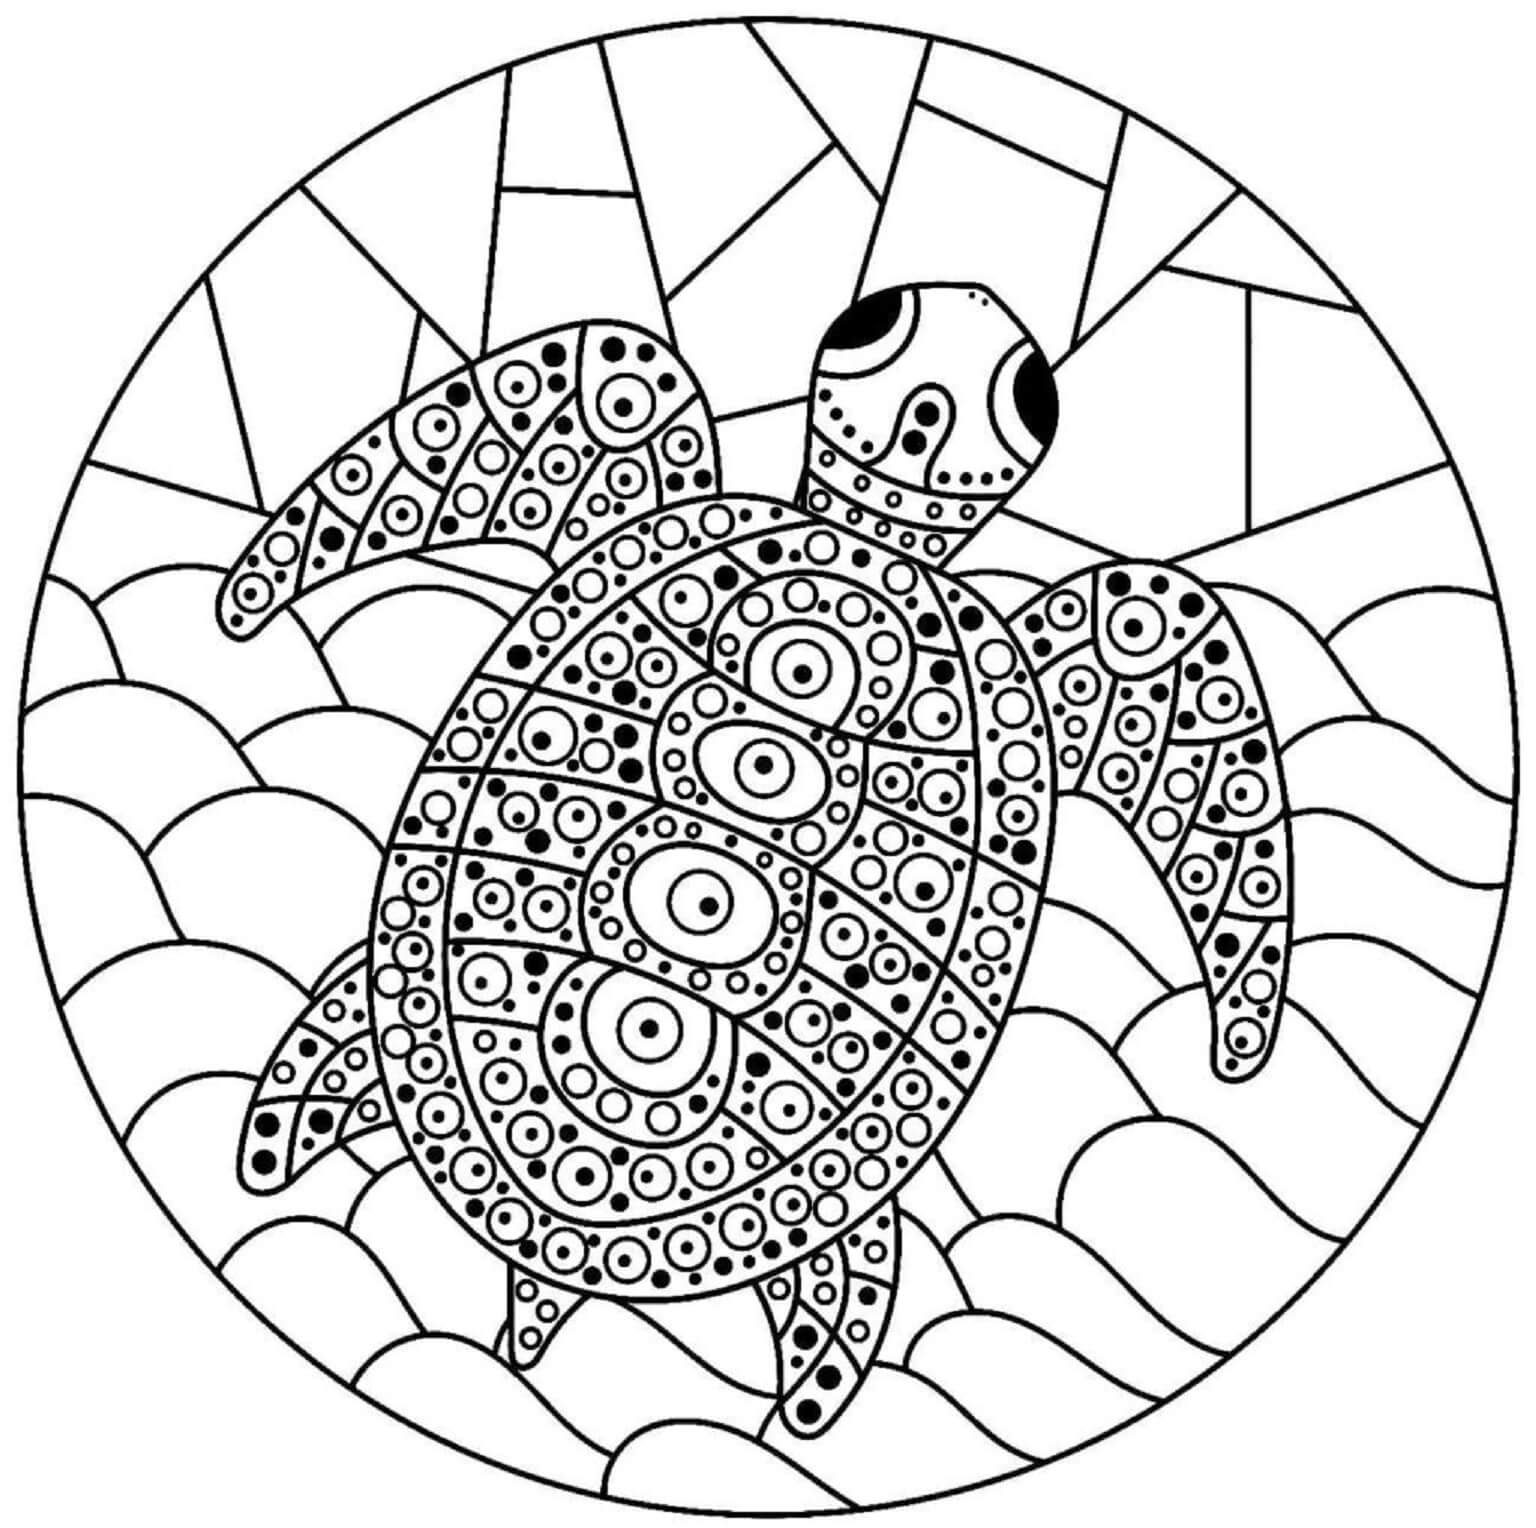 Mandala Turtle Coloring Page - Sheet 11 Mandalas